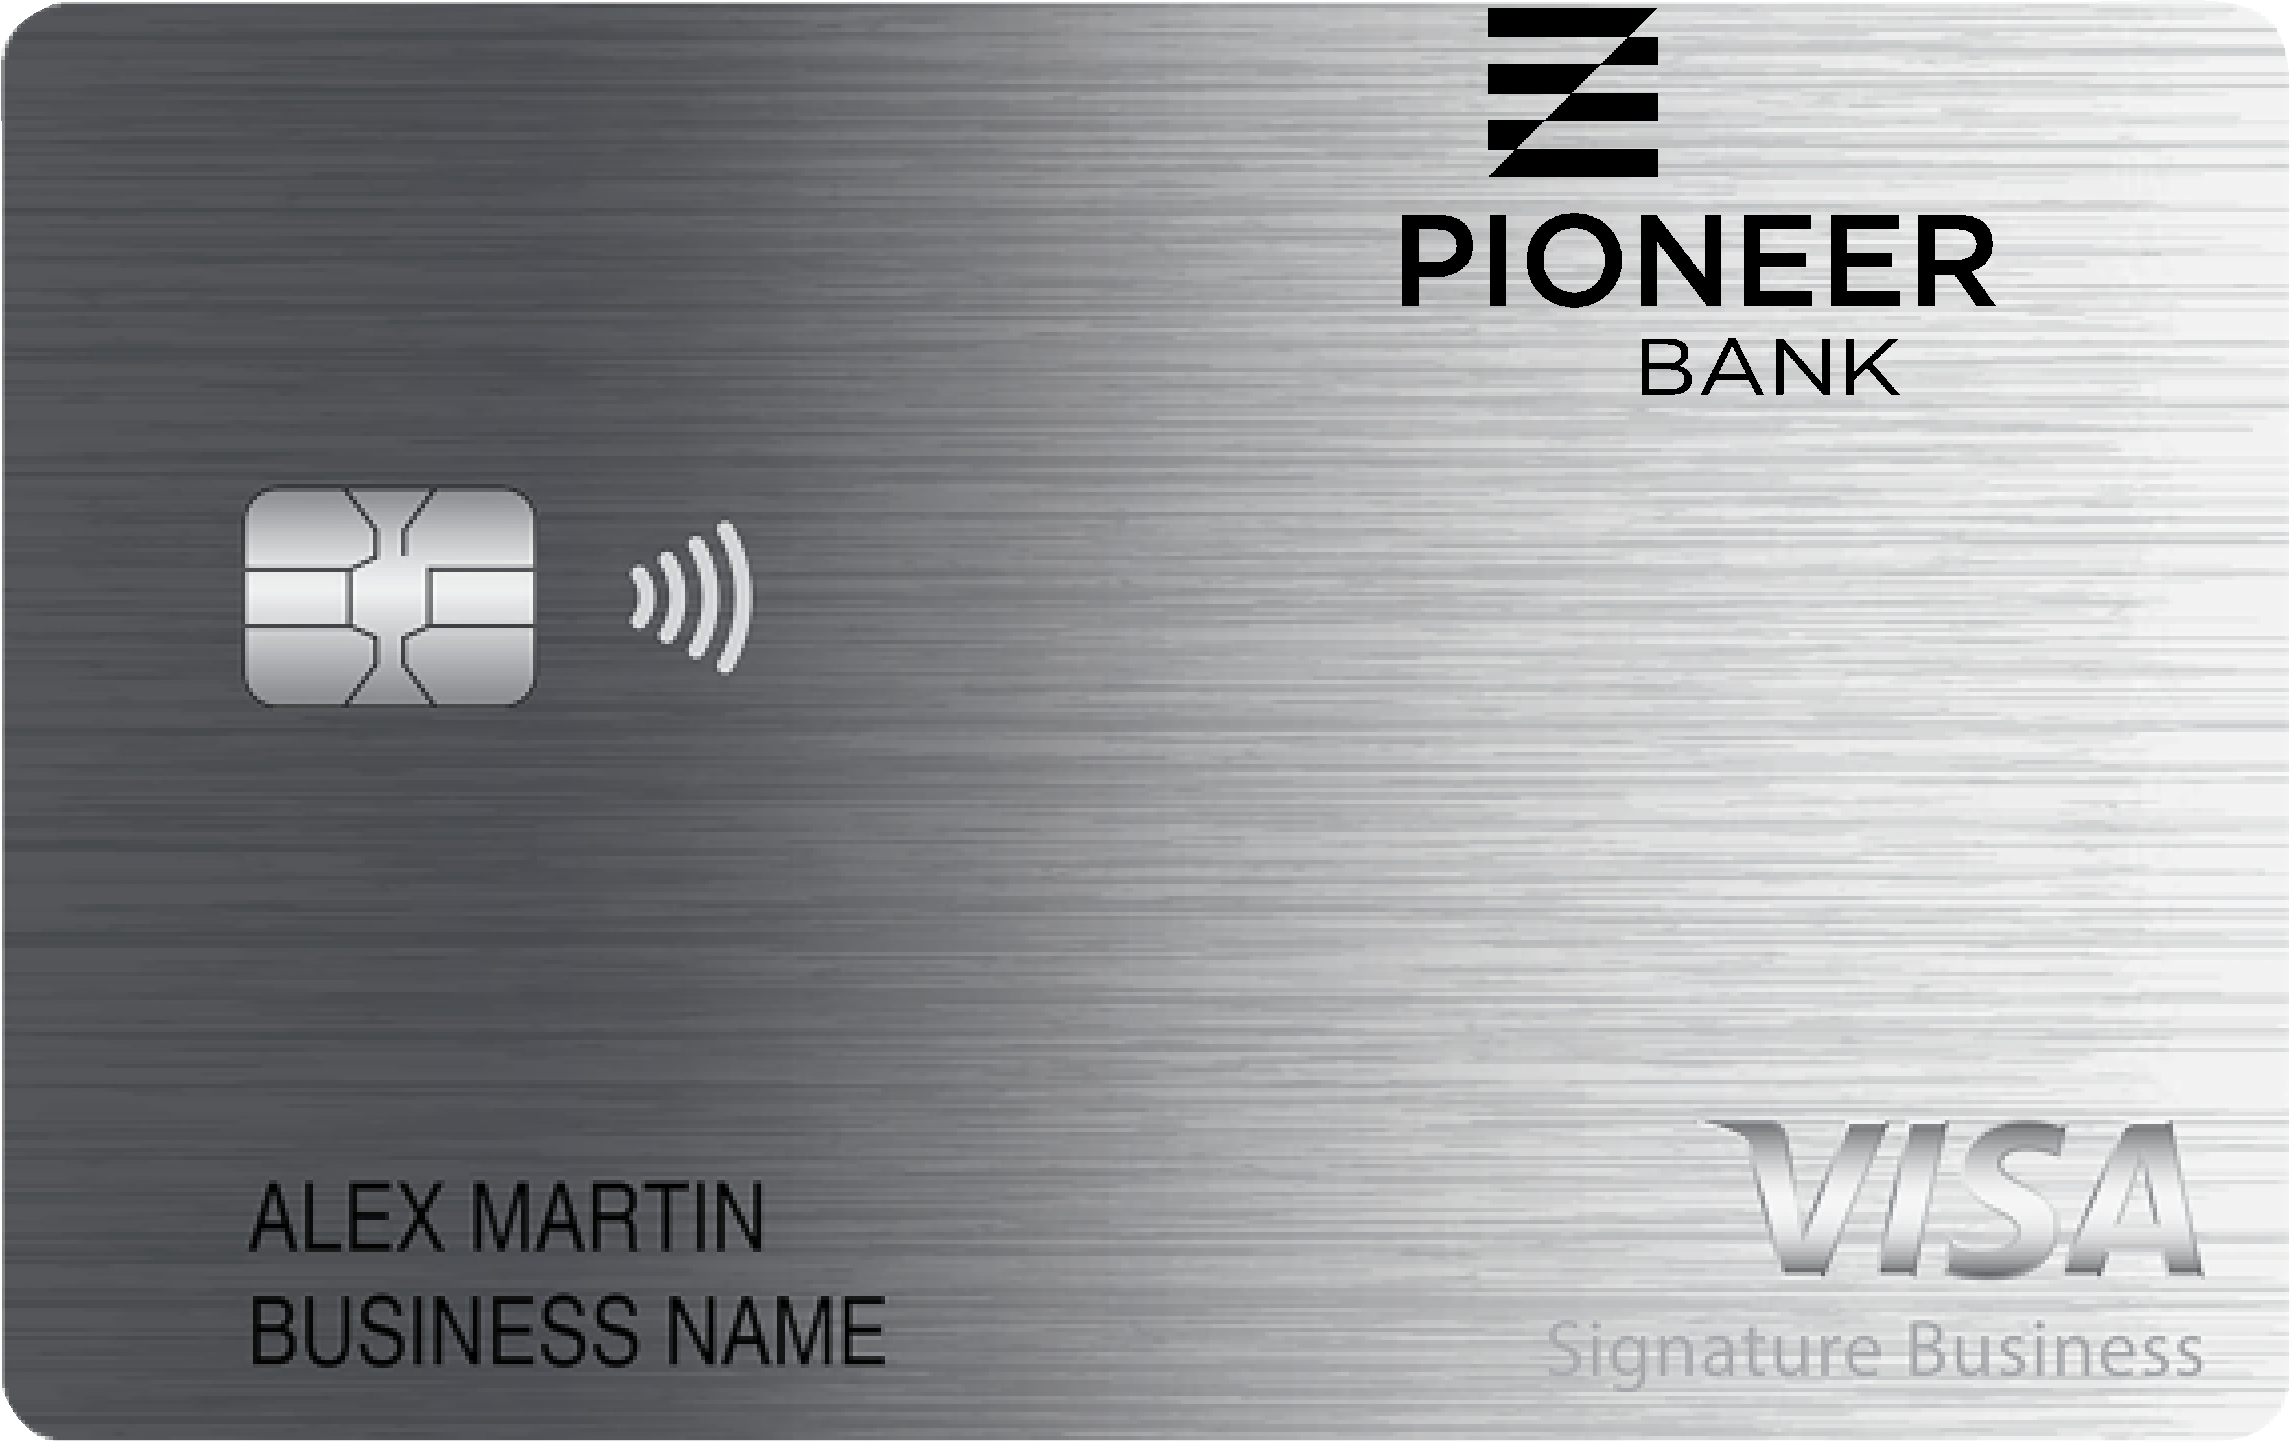 Pioneer Bank Smart Business Rewards Card